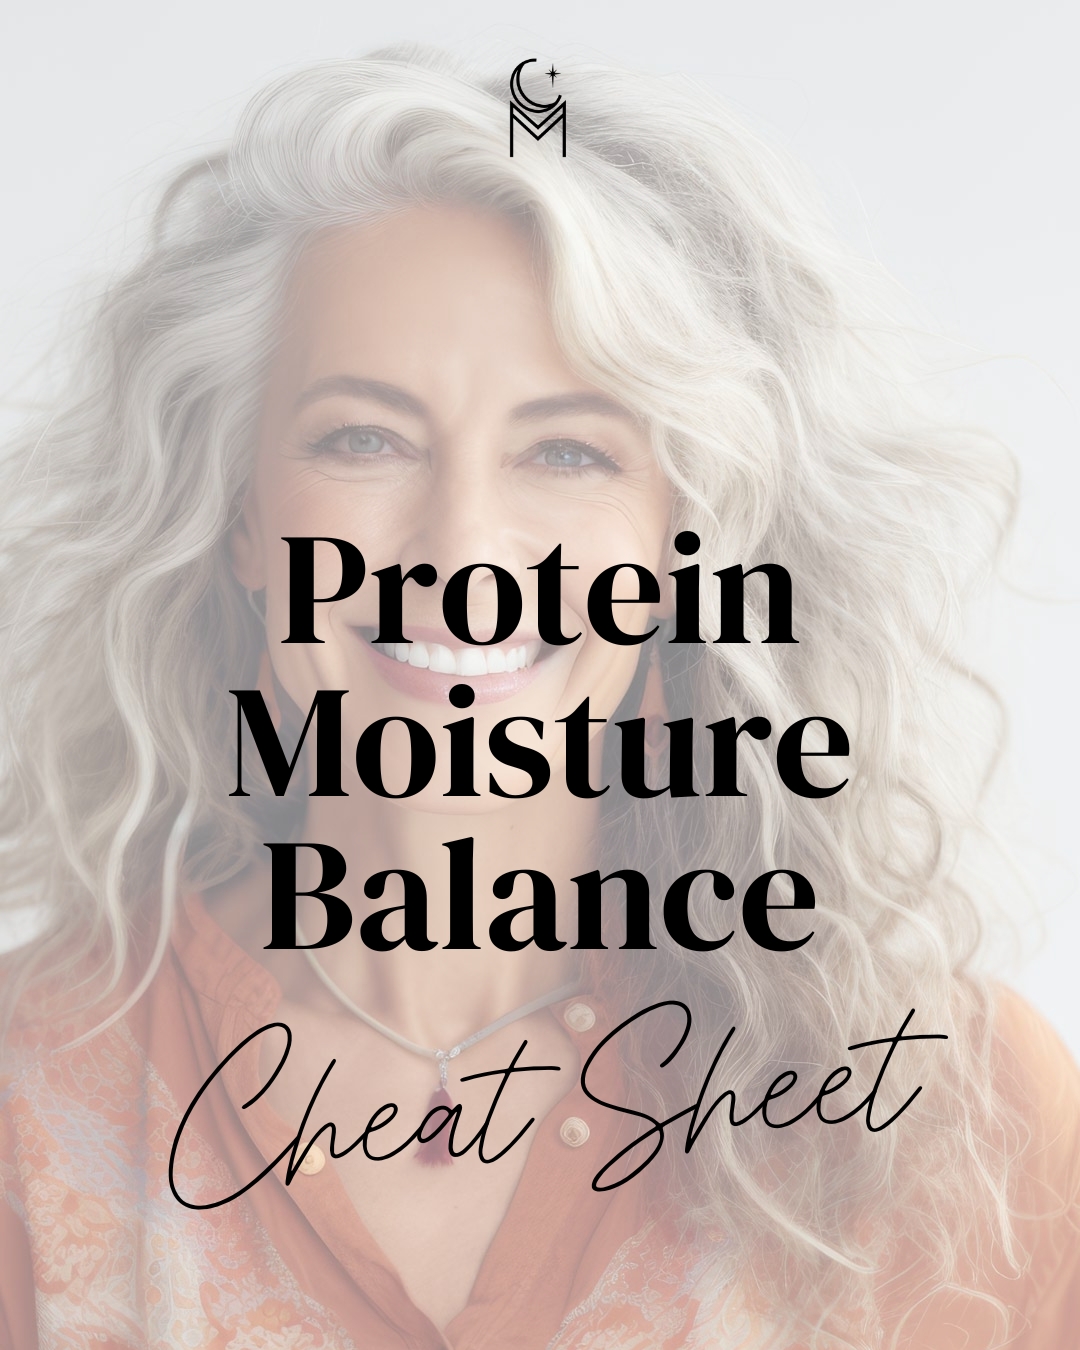 curl maven protein moisture balance cheat sheet